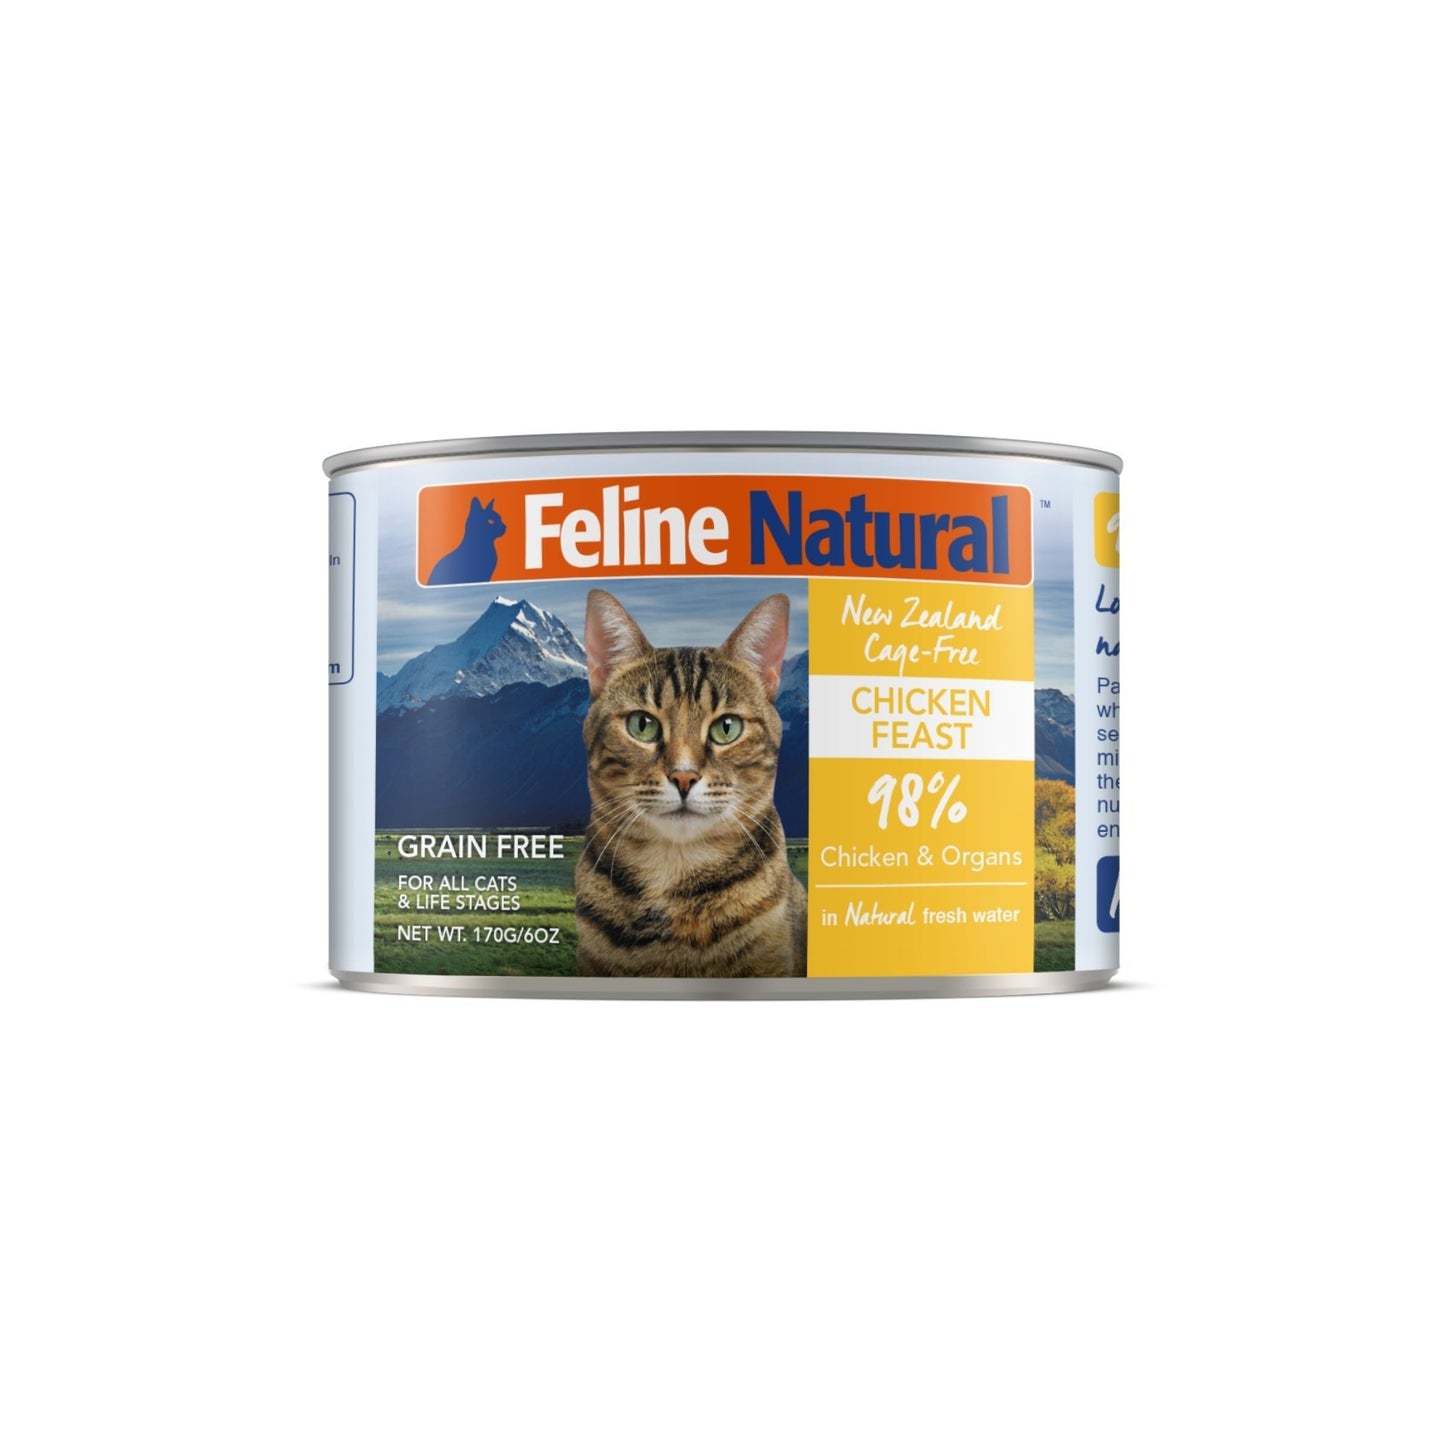 [BUNDLE DEAL] Feline Natural Canned - 24 Cans